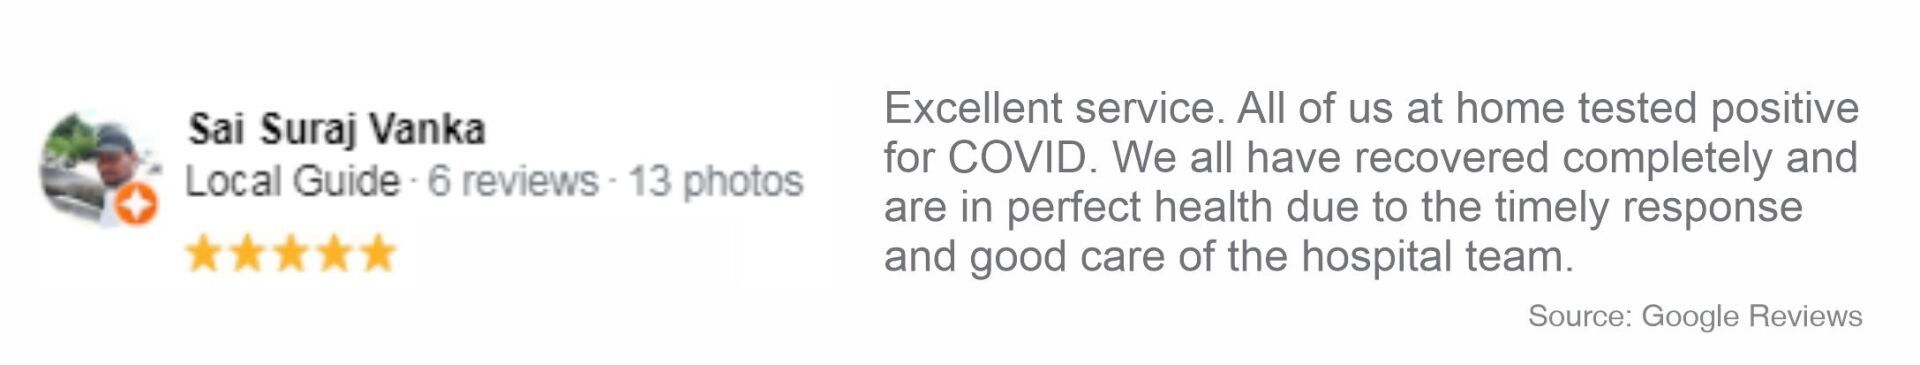 coronavirus - COVID-19 home treatment google reviews - Pace hospitals